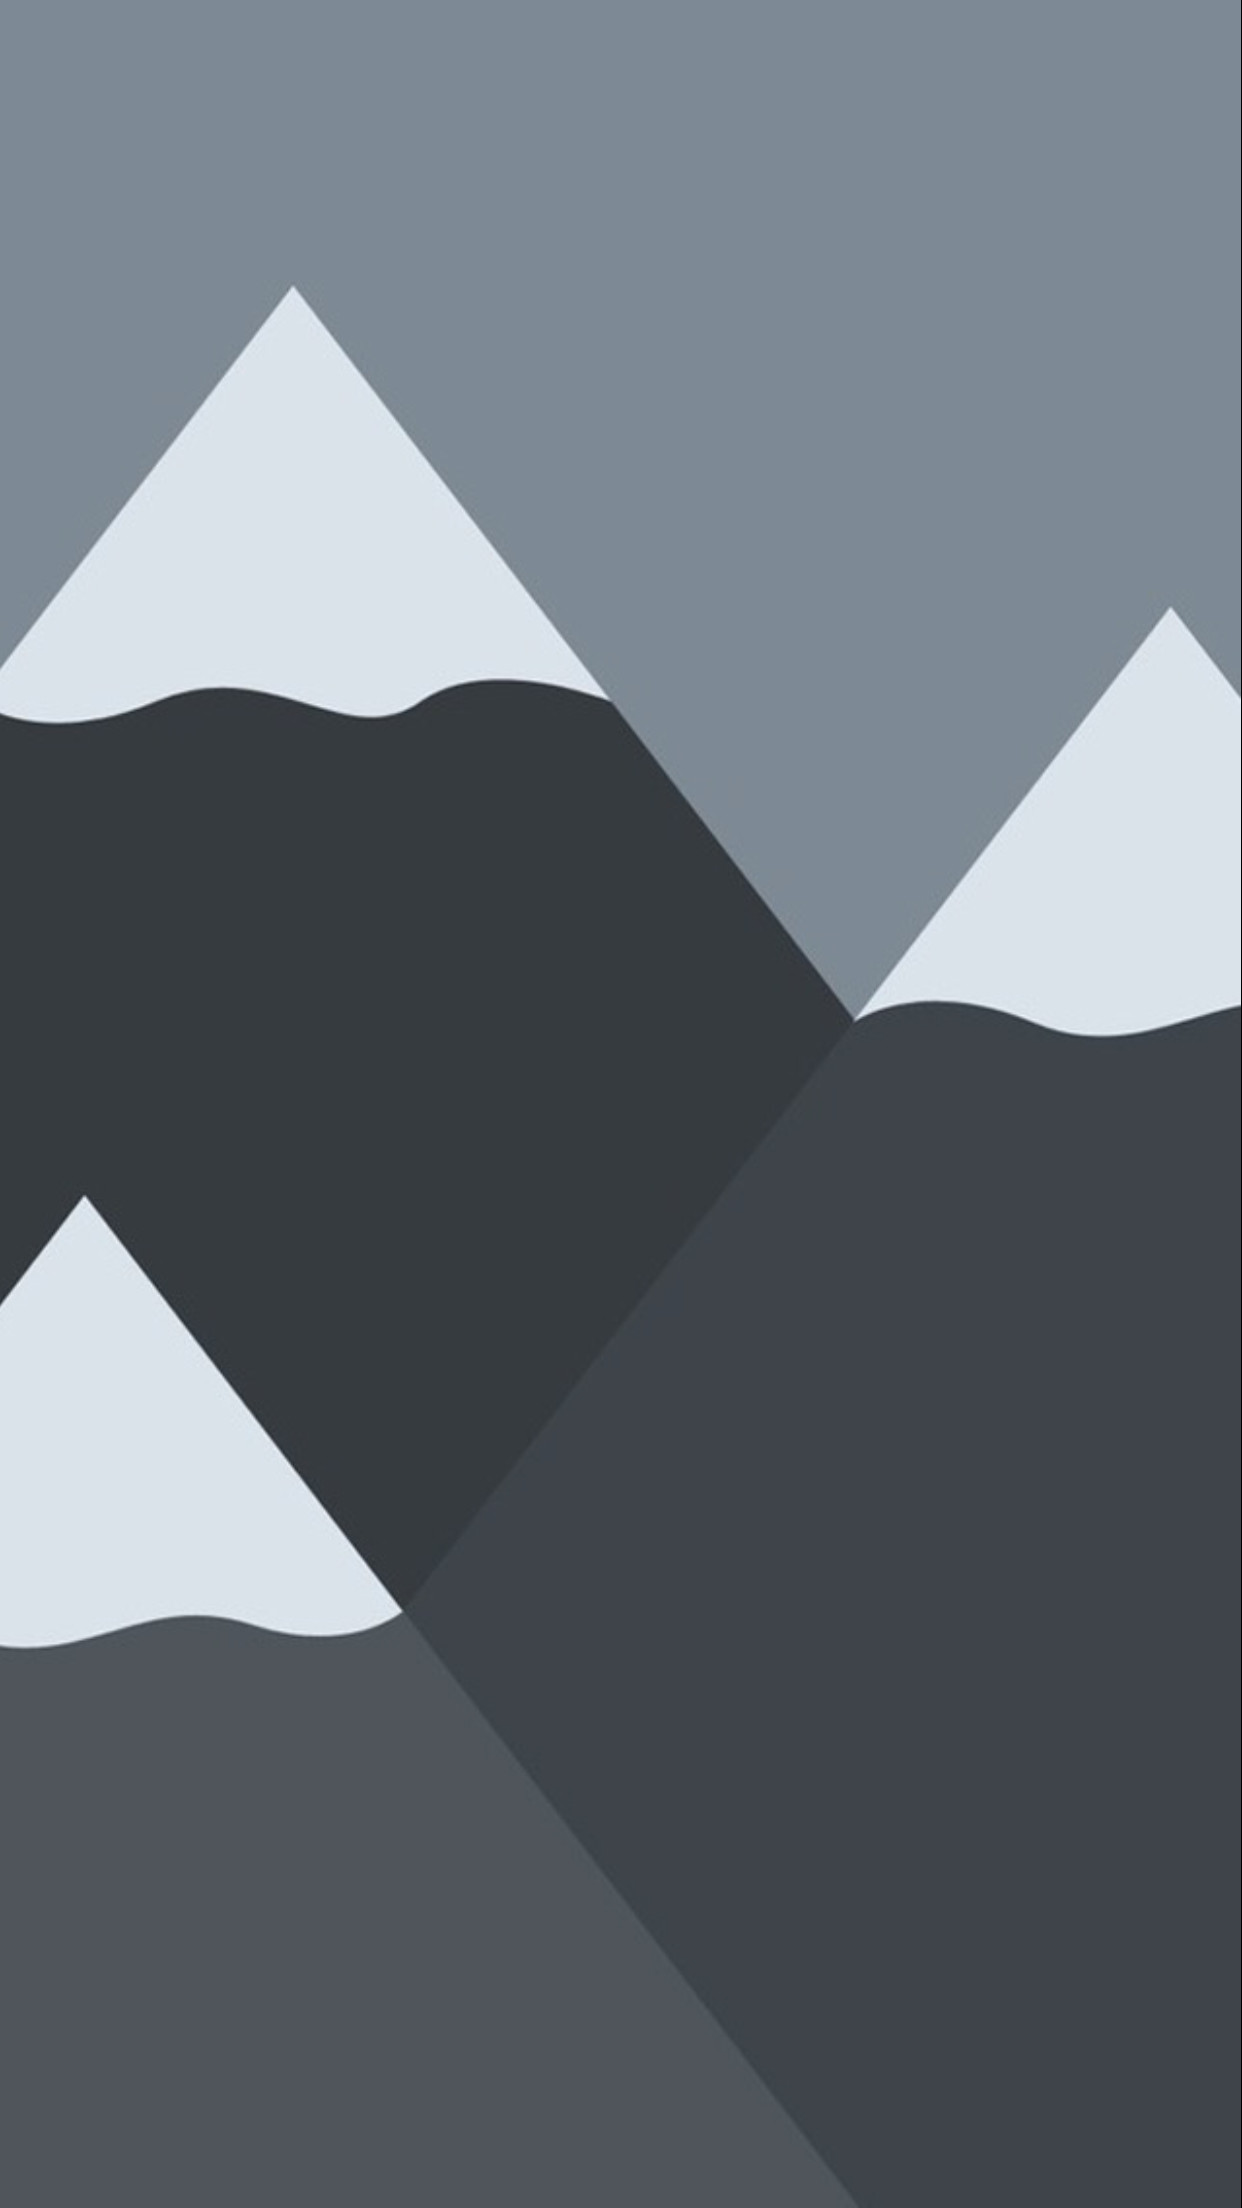 1242x2208 Mountains Minimal Wallpaper iPhone 6 Plus. Black shapes